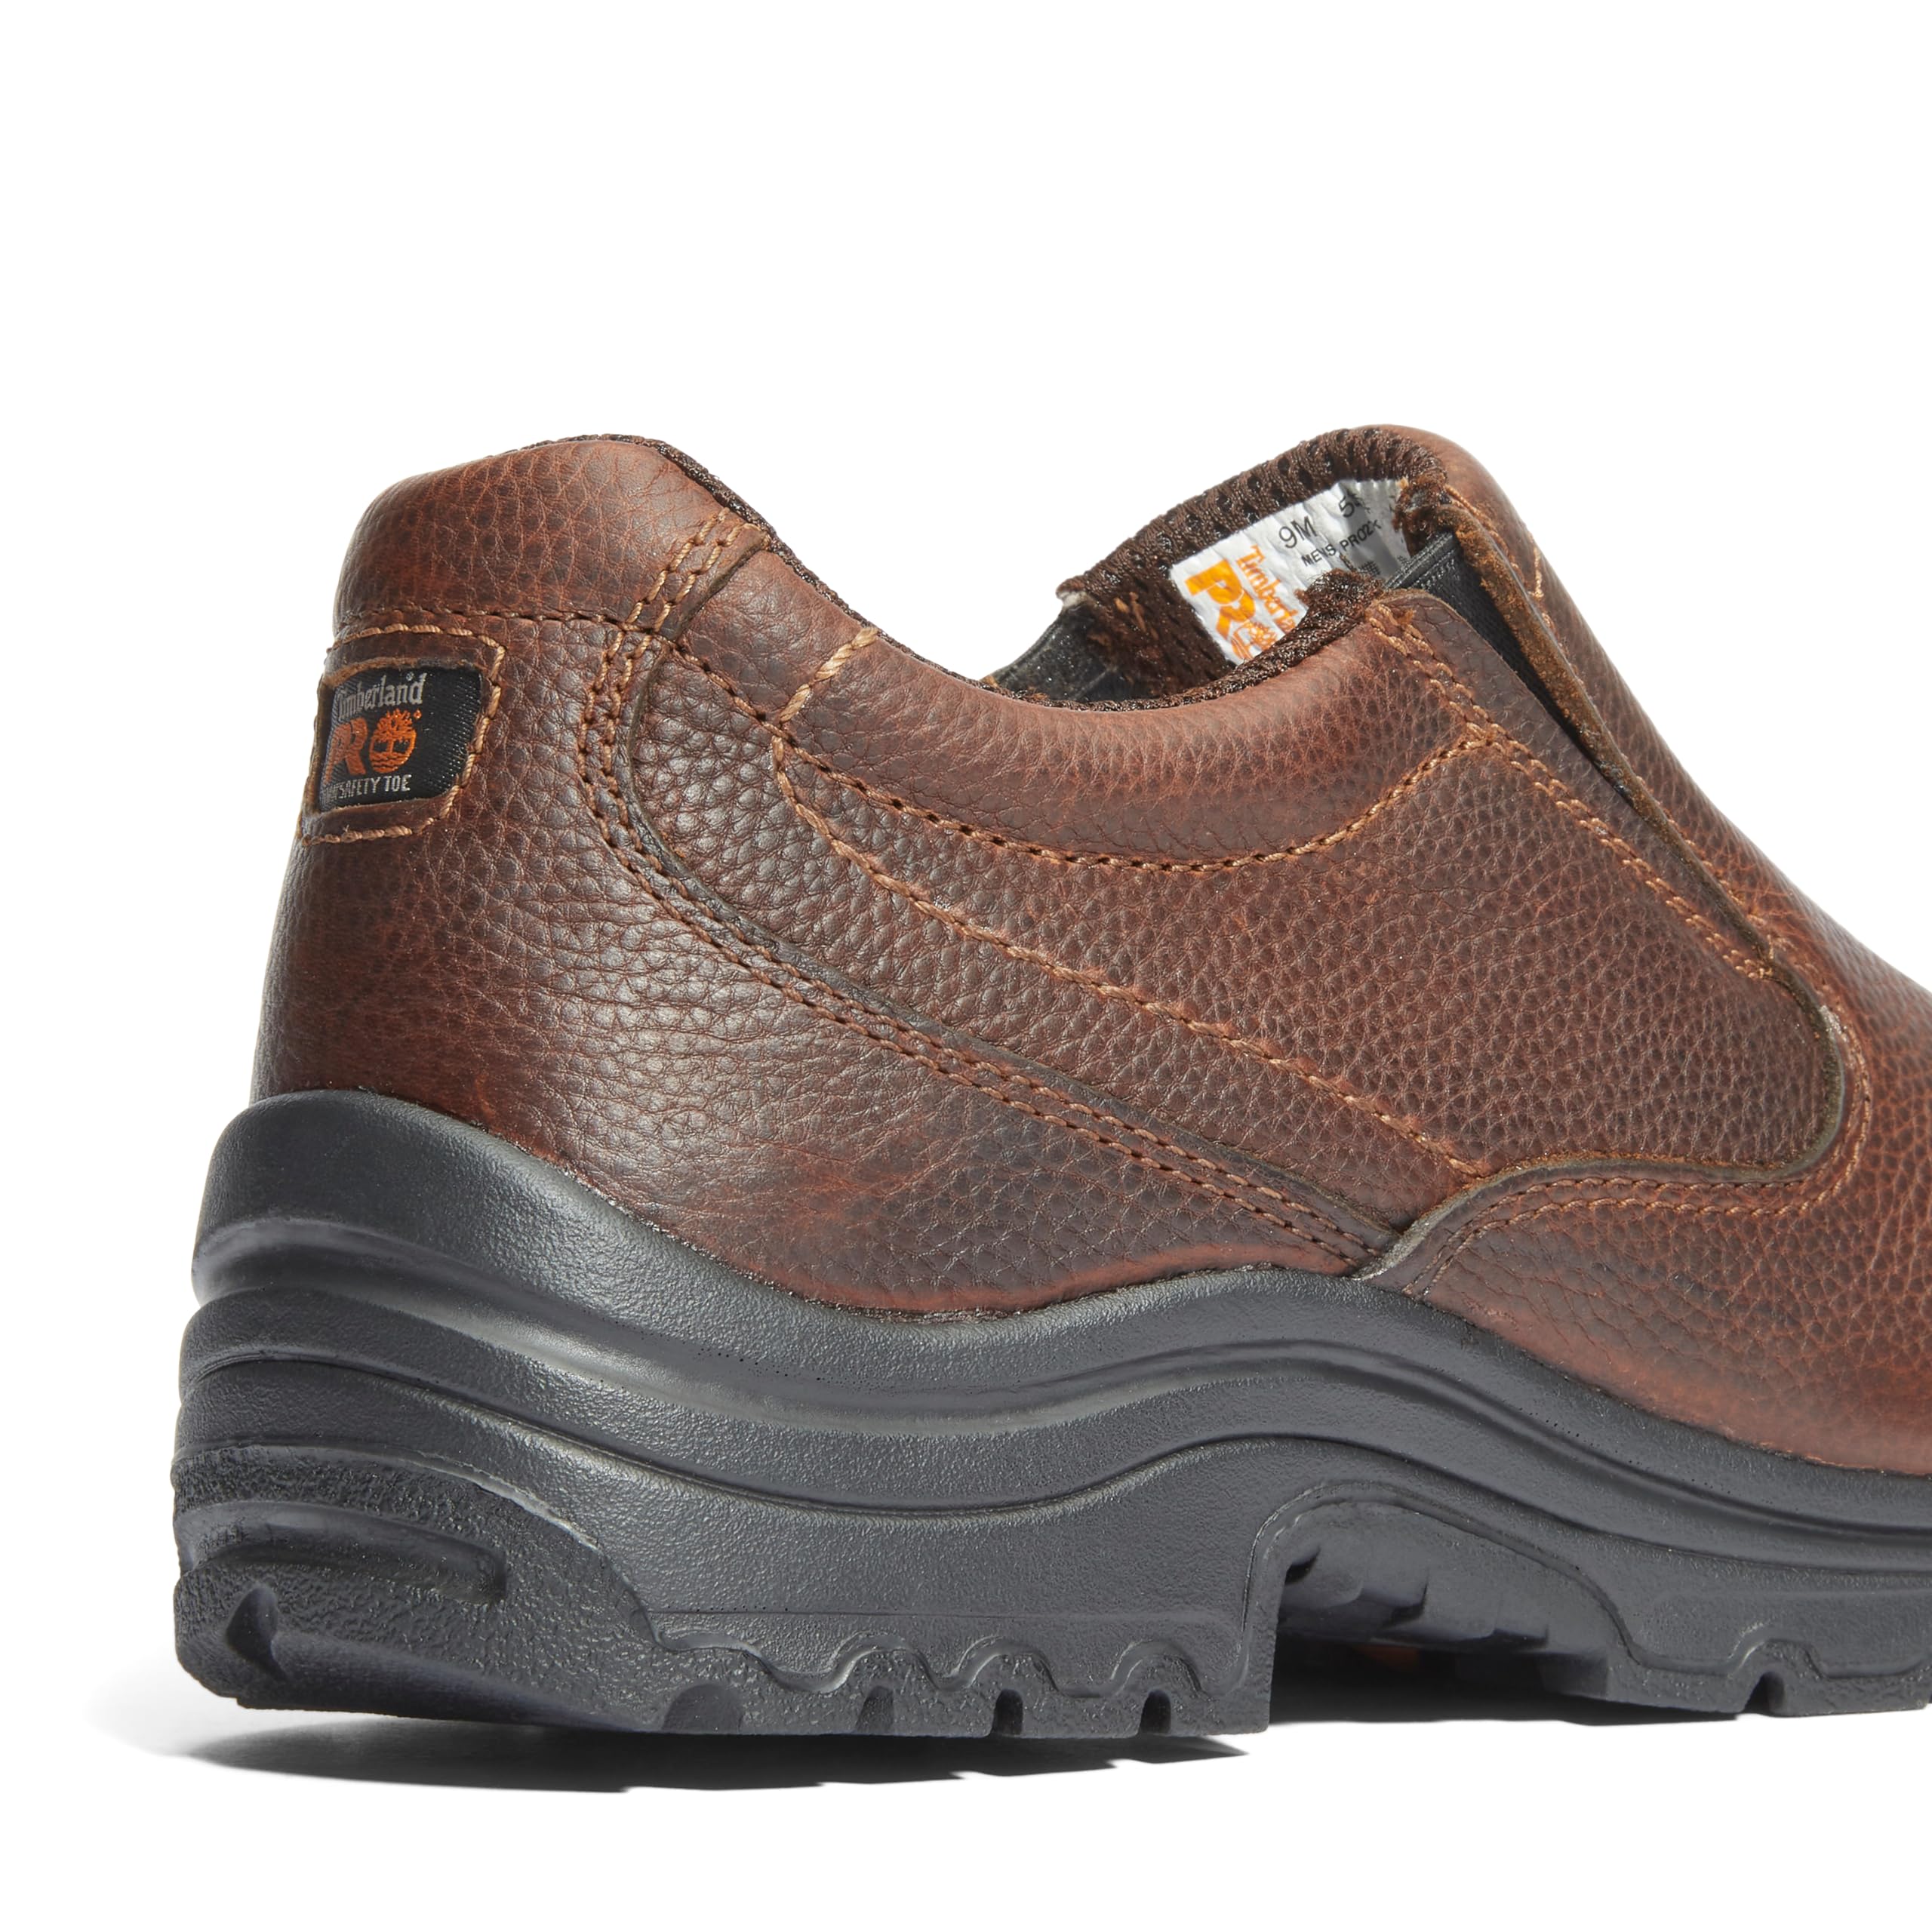 Timberland PRO Men's Titan Slip on Alloy Safety Toe Industrial Work Shoe